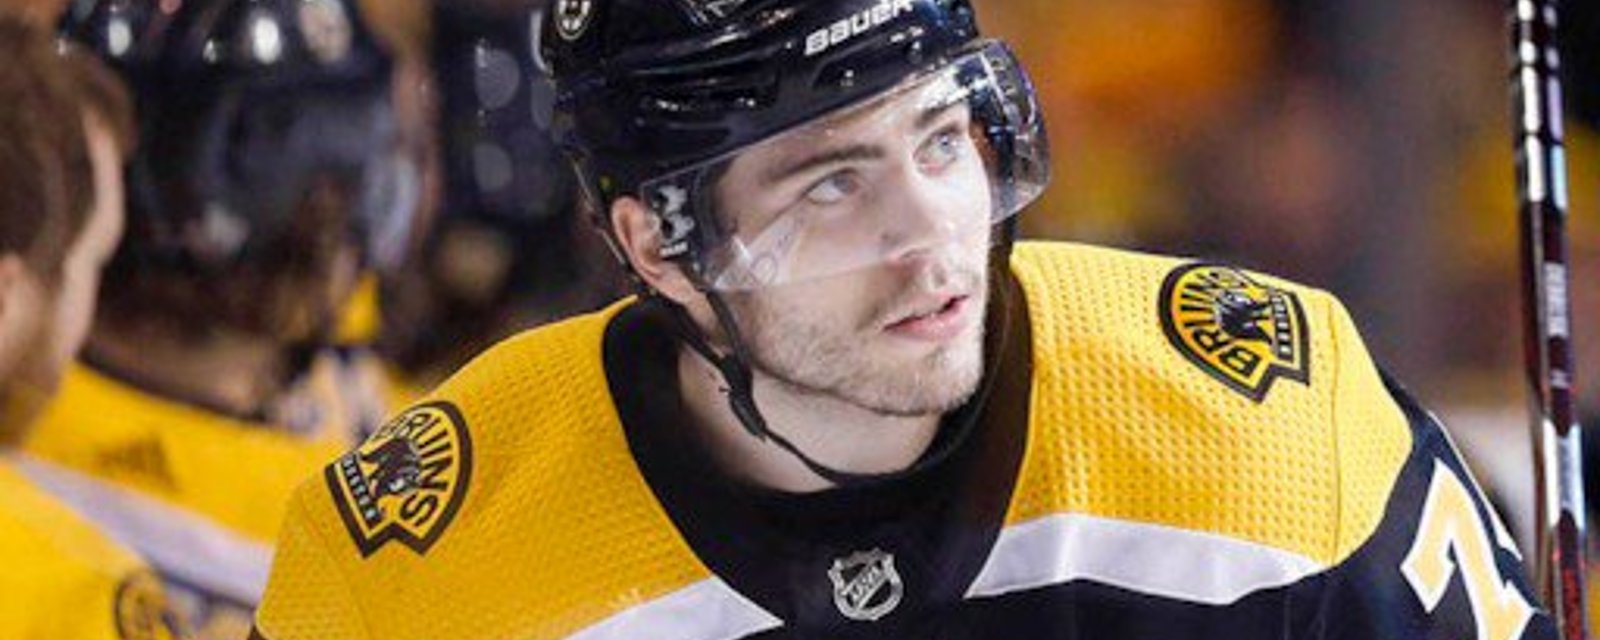 Breaking: Bruins' DeBrusk missing from practice after Kadri's brutal hit last night 